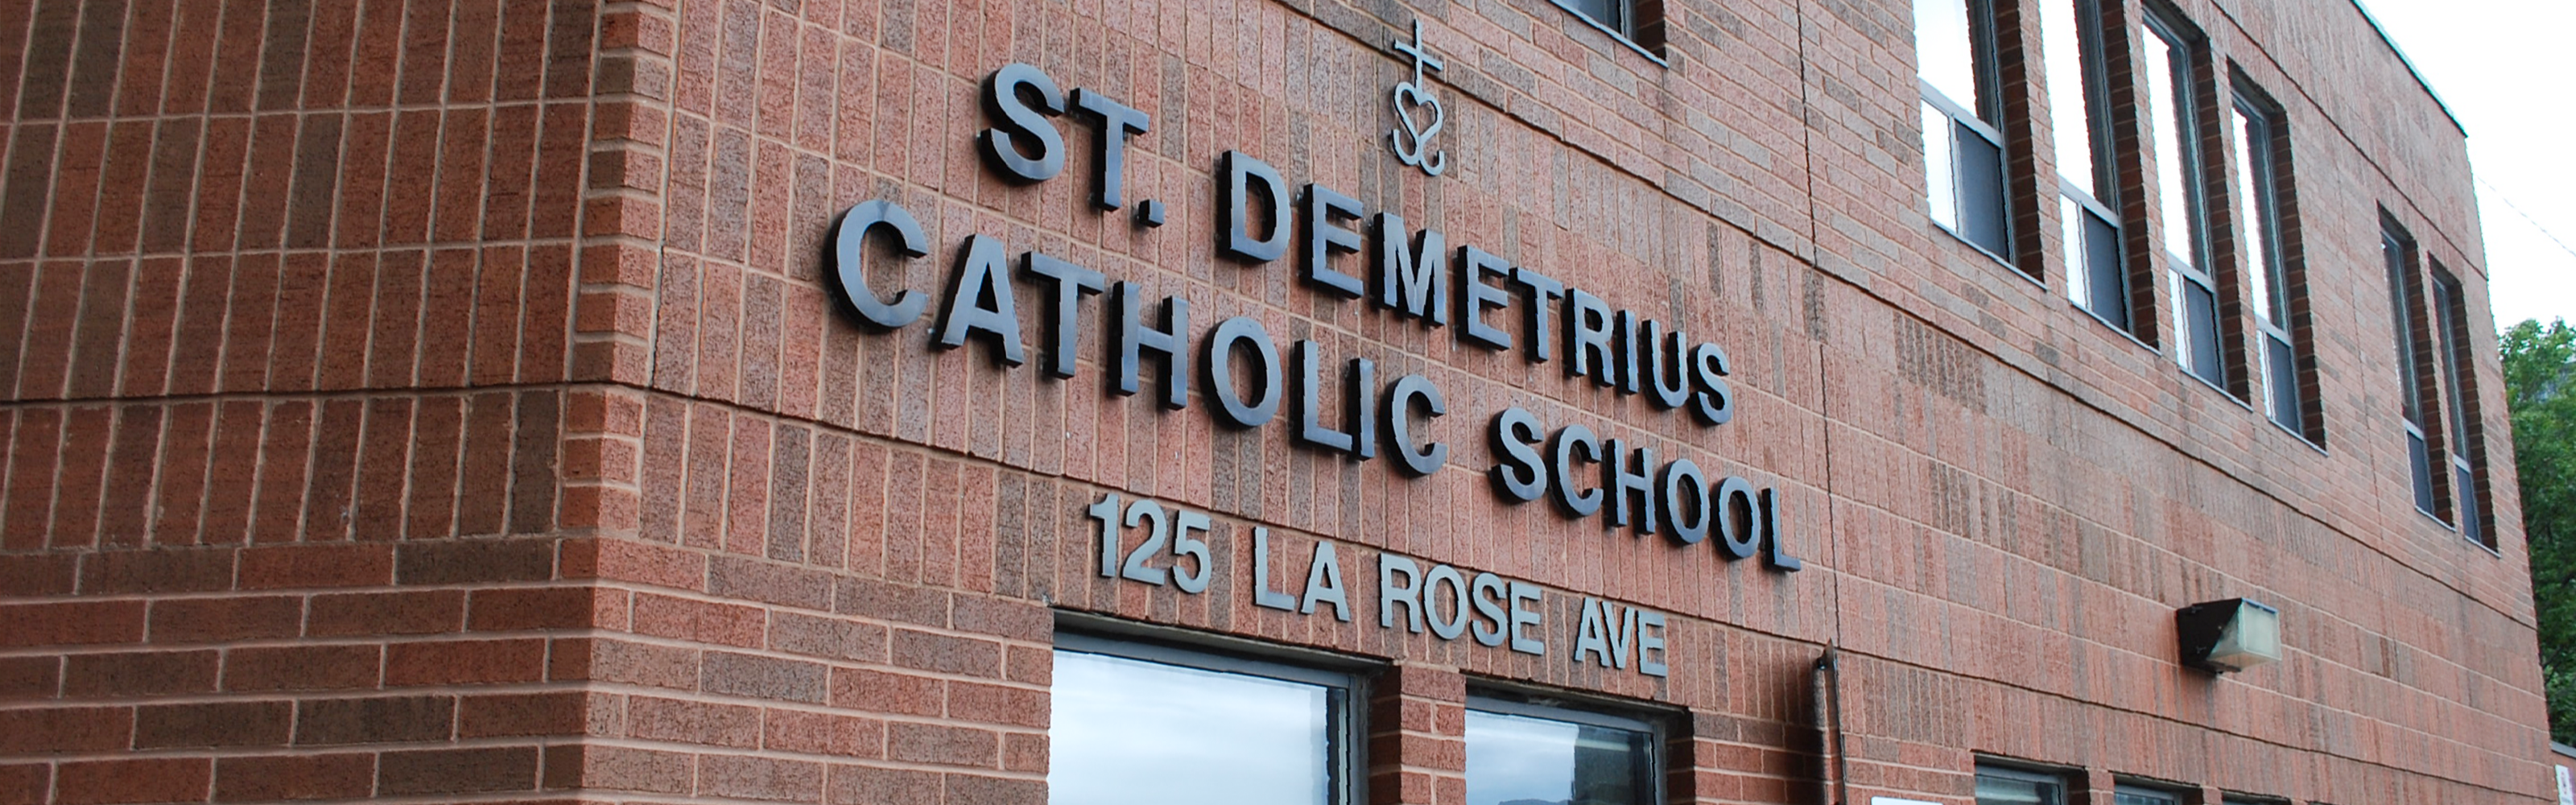 The front of the St. Demetrius Catholic School building.